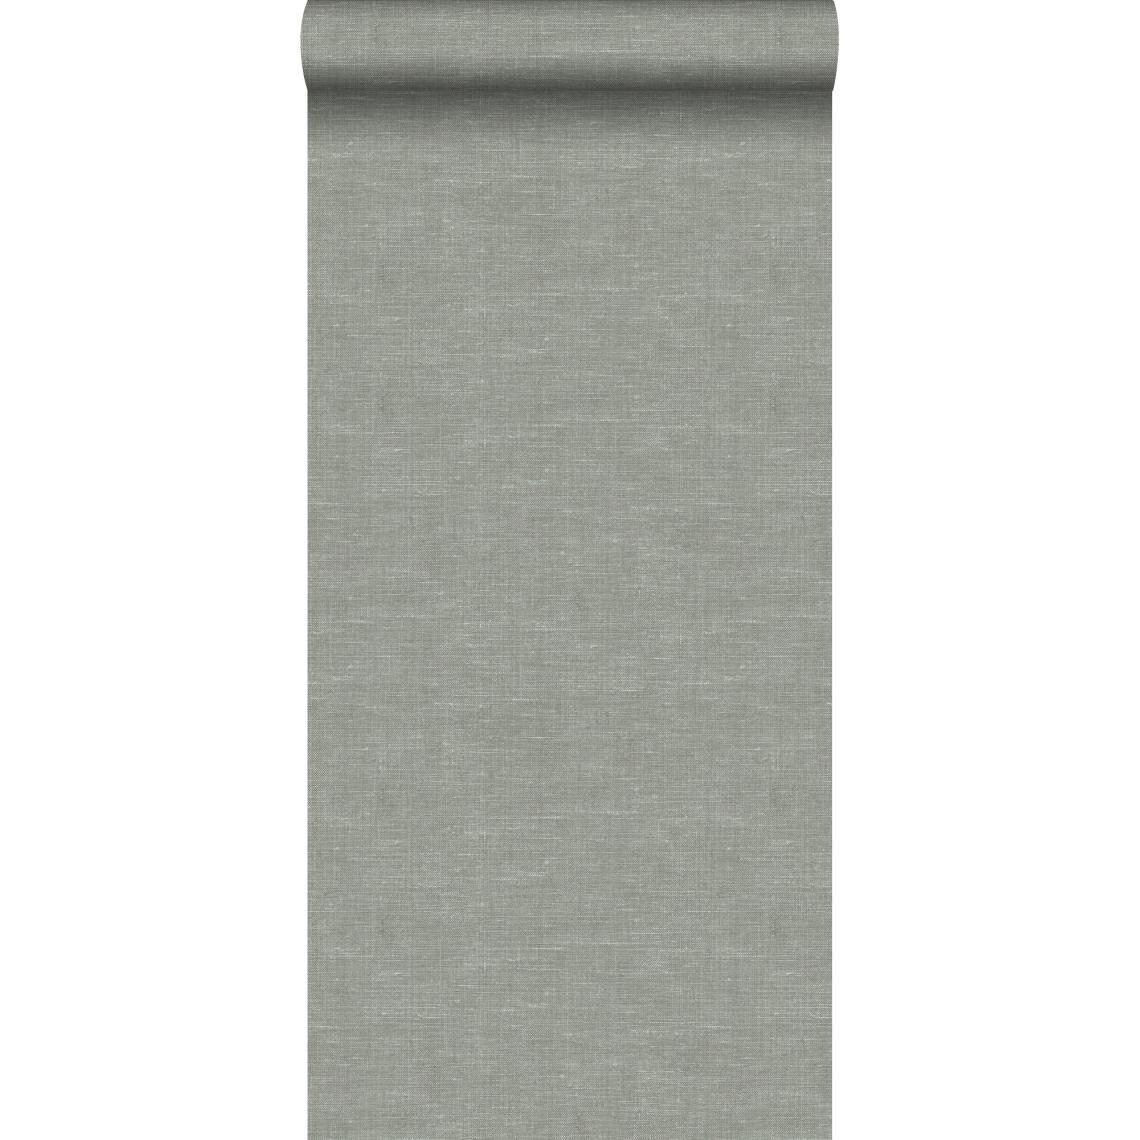 Origin - Origin papier peint lin vert grisé - 347634 - 0.53 x 10.05 m - Papier peint